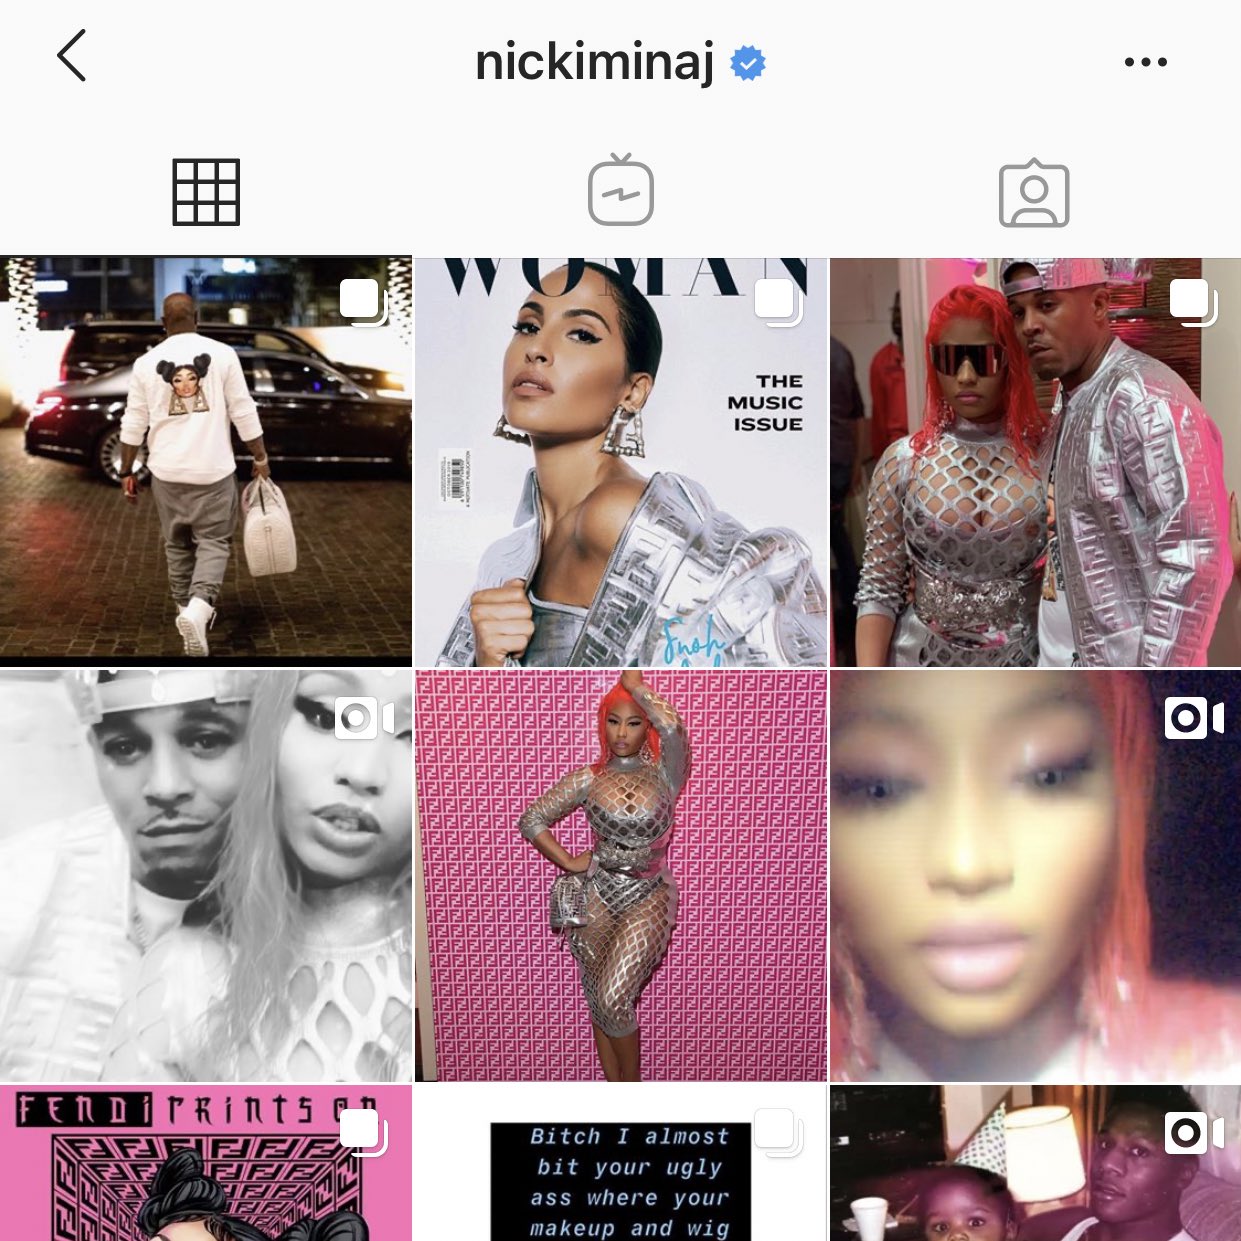 Nicki Minaj's 'FENDI Prints On' Collection Launch